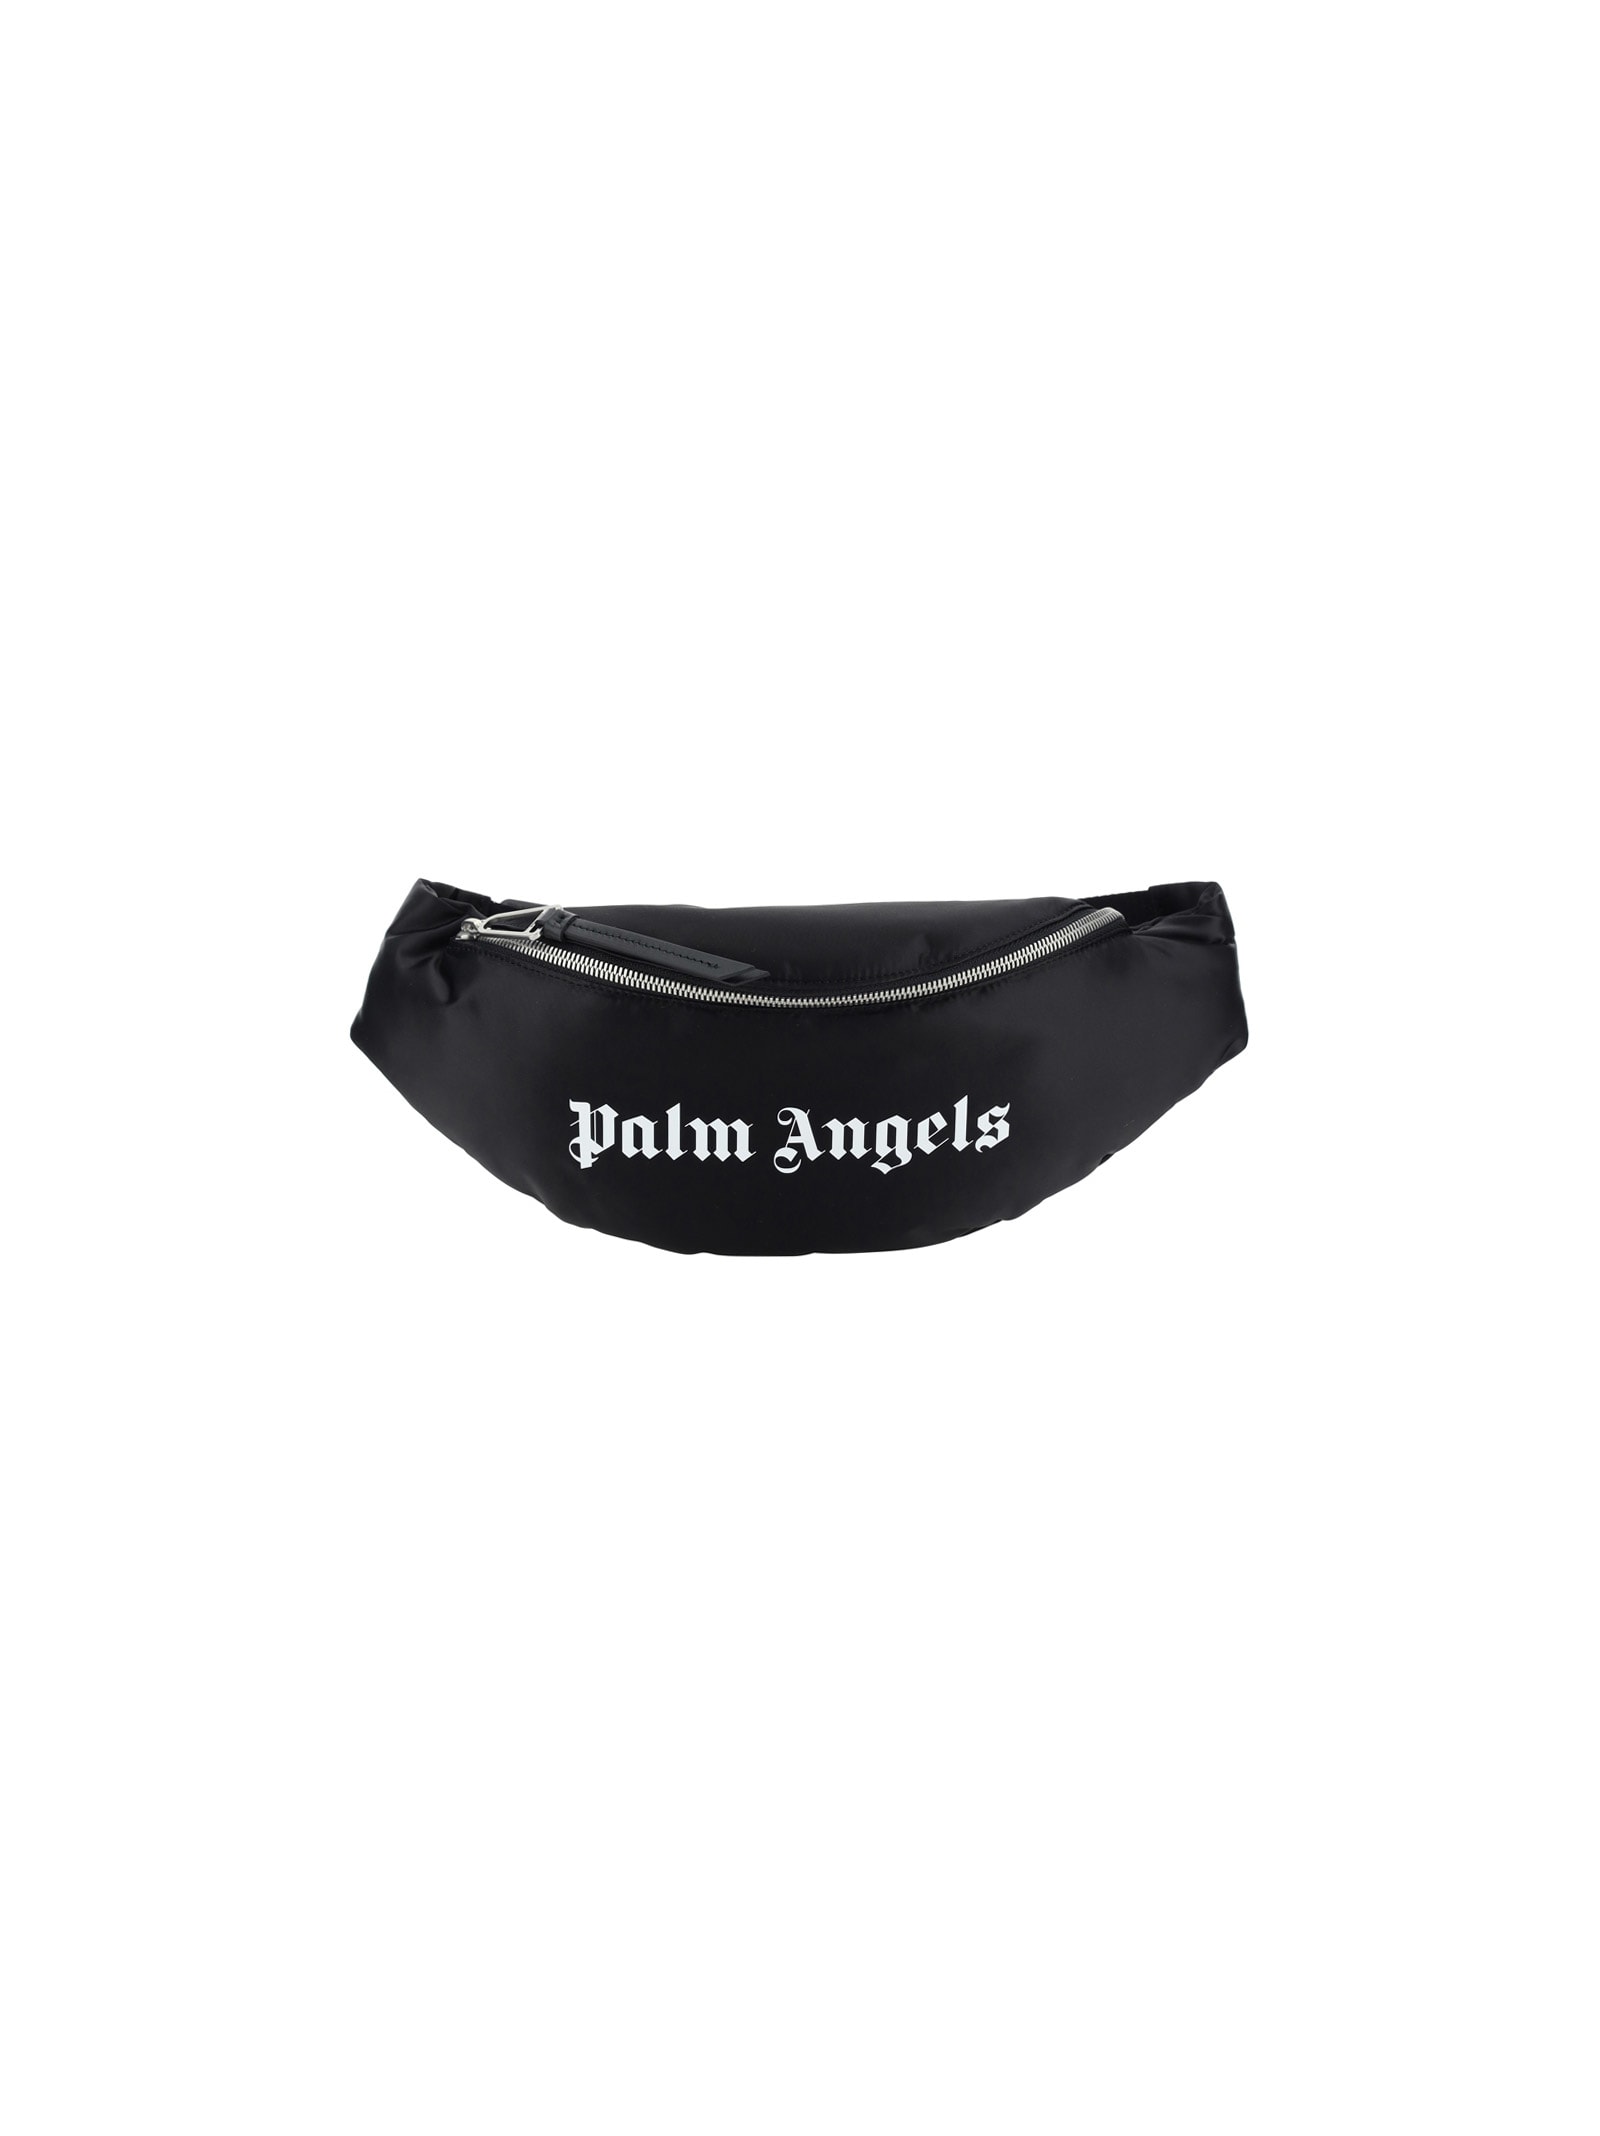 Palm Angels Beltbag